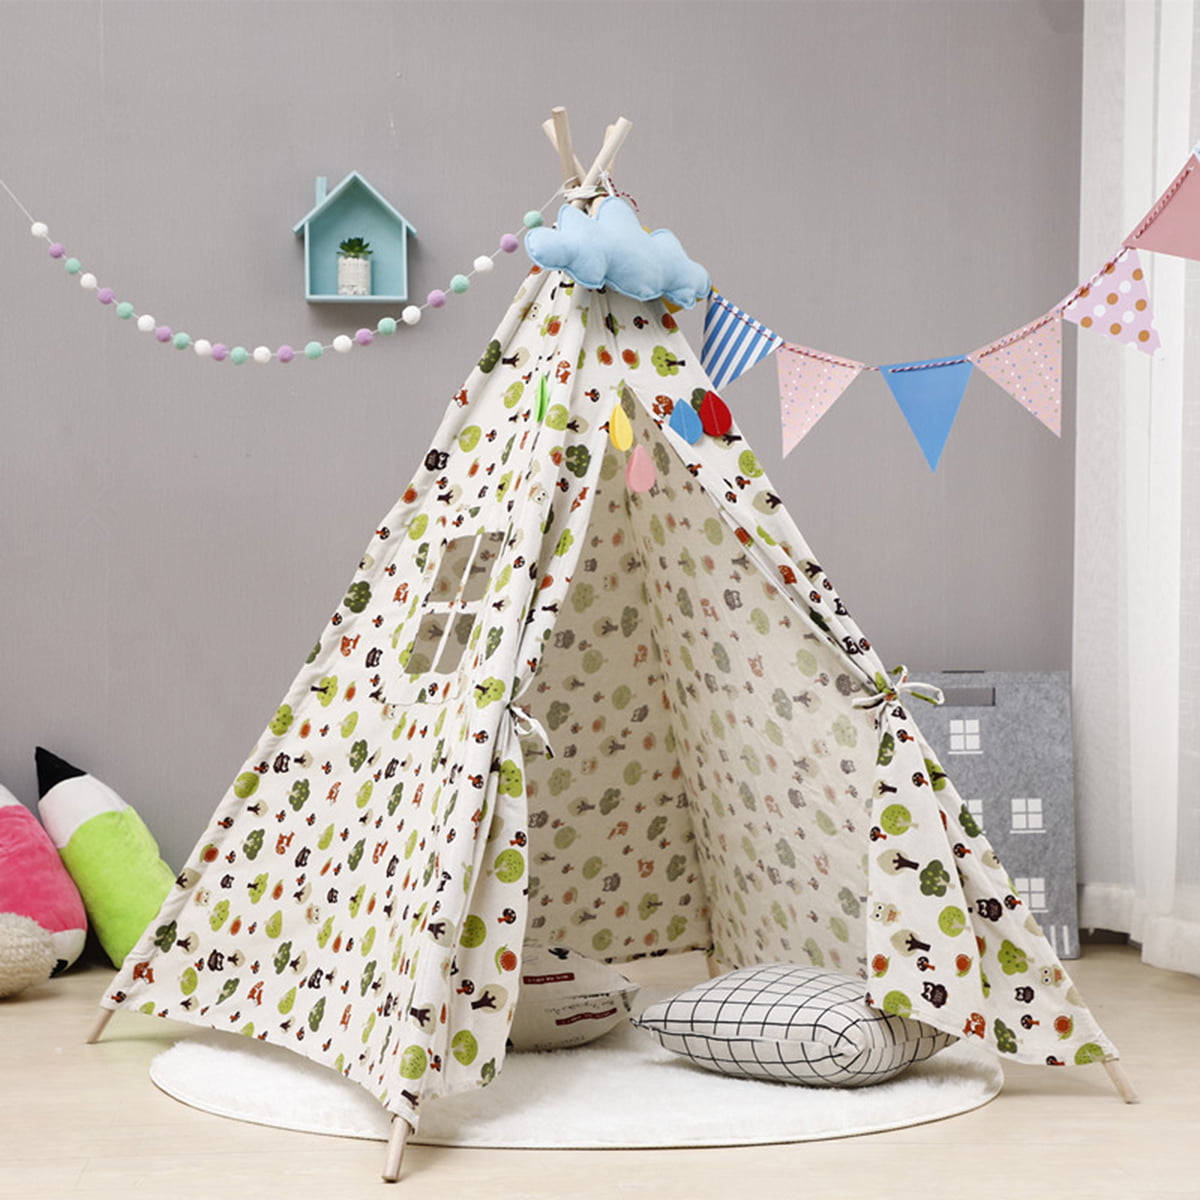 Kids Teepee Tent Indian Wigwam Child Play House Indoor Outdoor Xmas Gift UK 